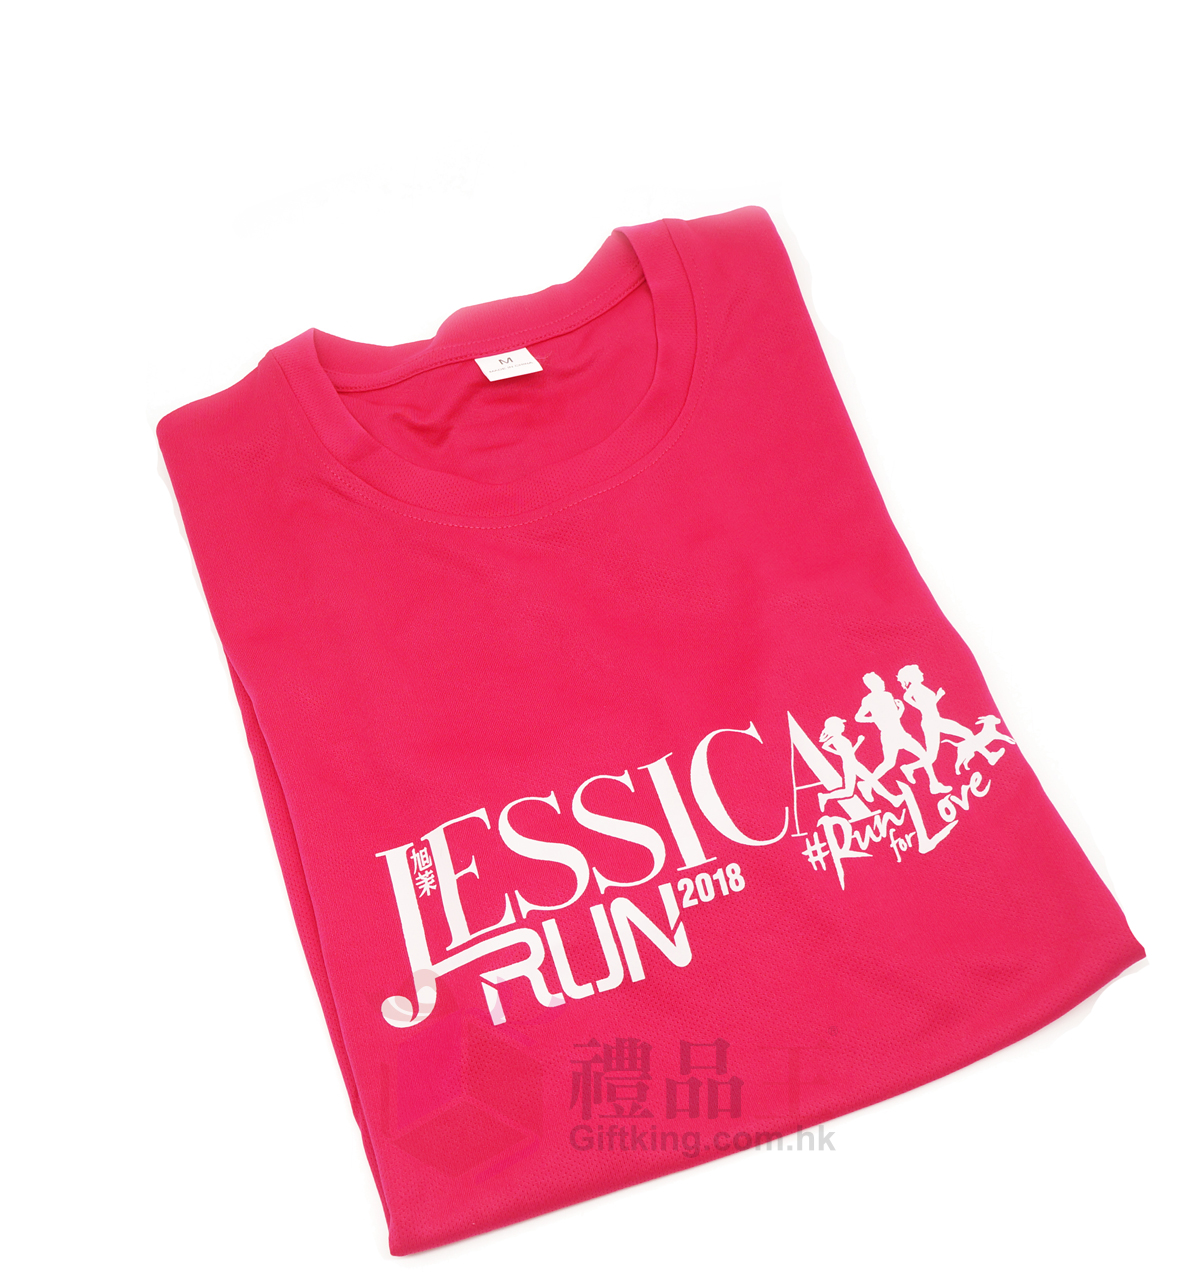 Jessica run 慈善跑T恤 (服飾禮品)